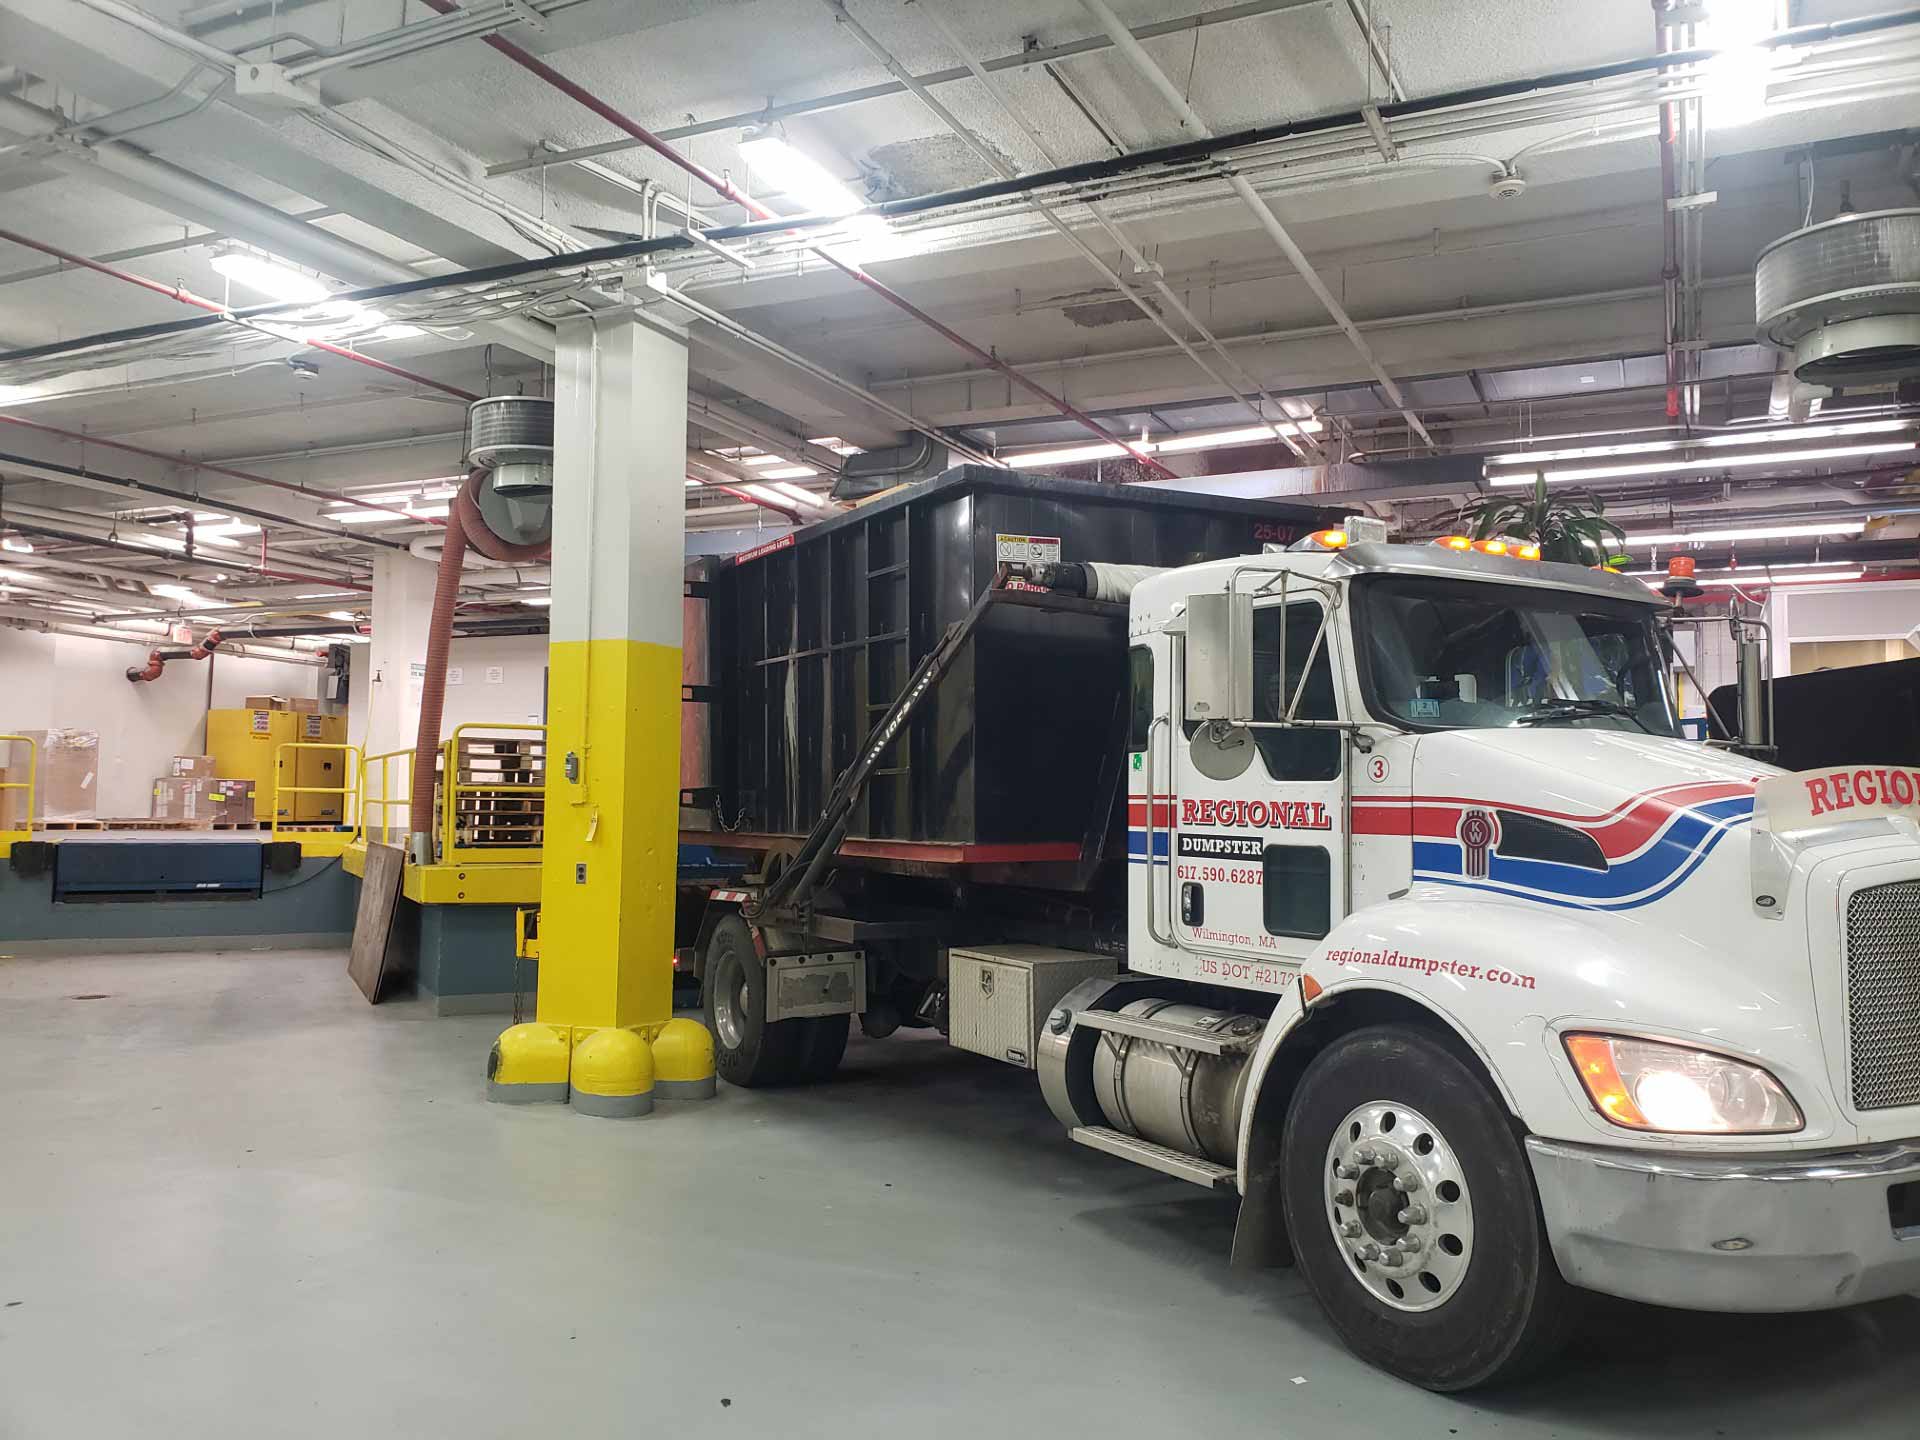 Regional Dumpster Rental truck parked in a garage